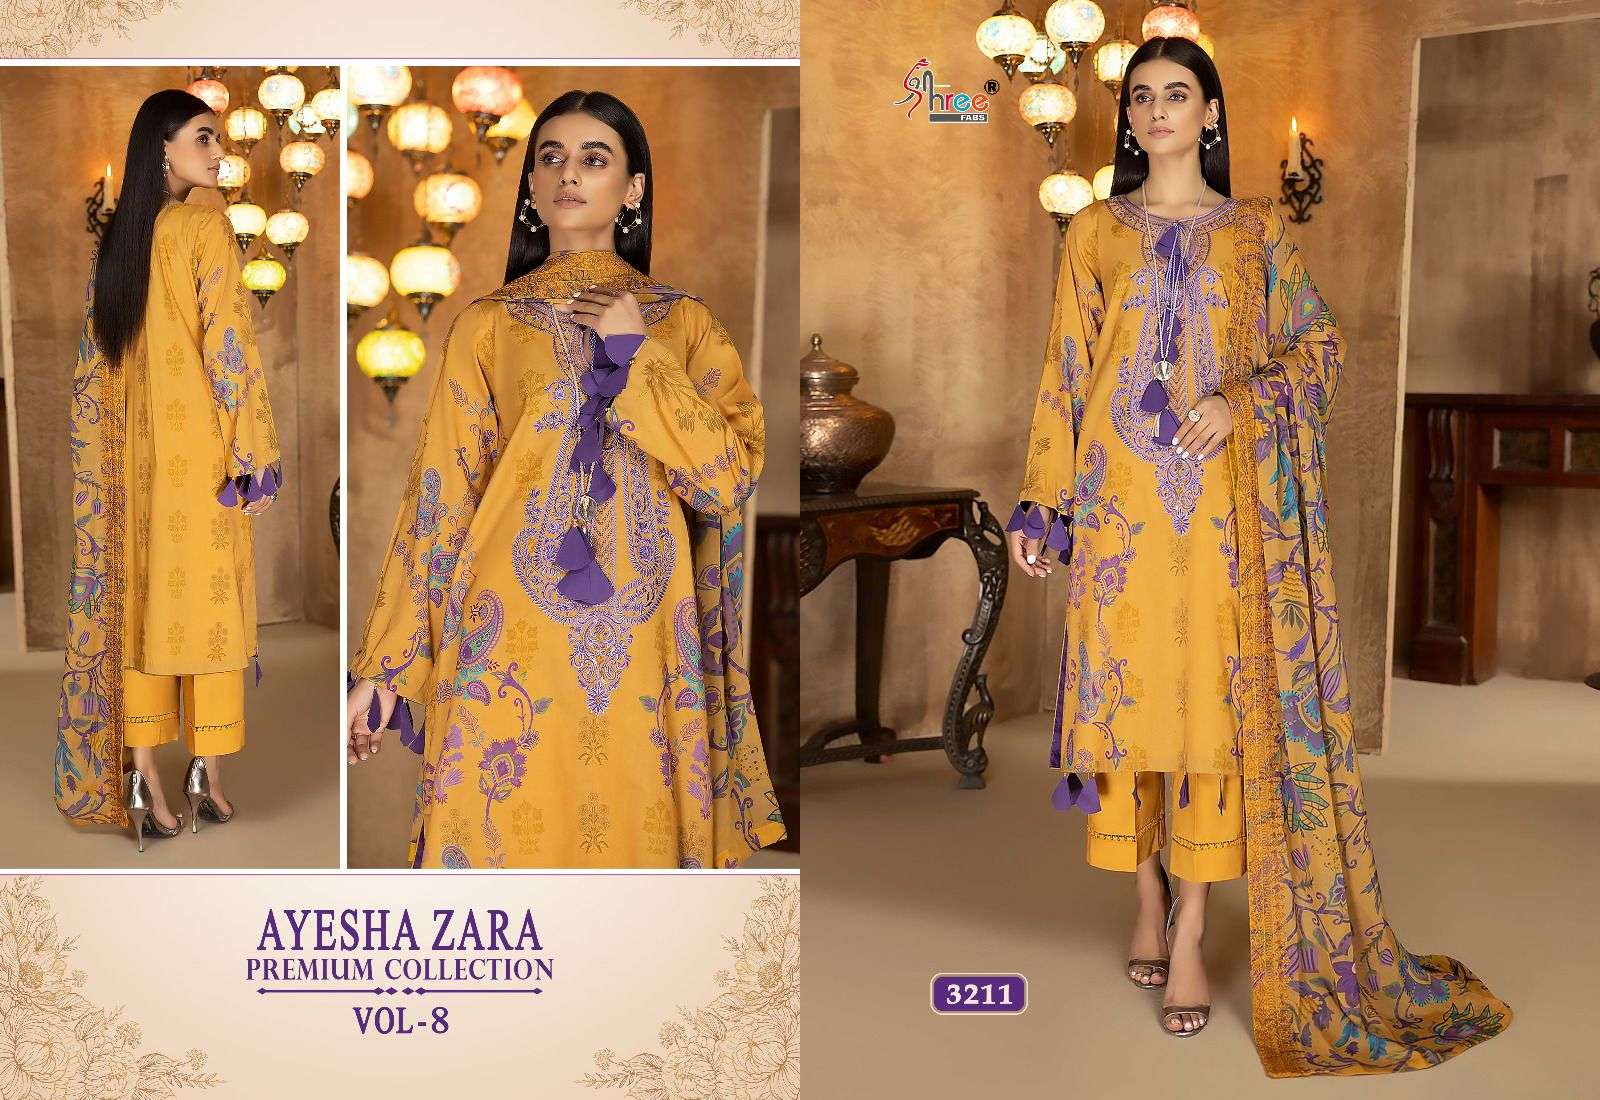 ayesha zara premium collection vol-8 by shree fabs 3208-3212 series pakistani salwar kameez surat